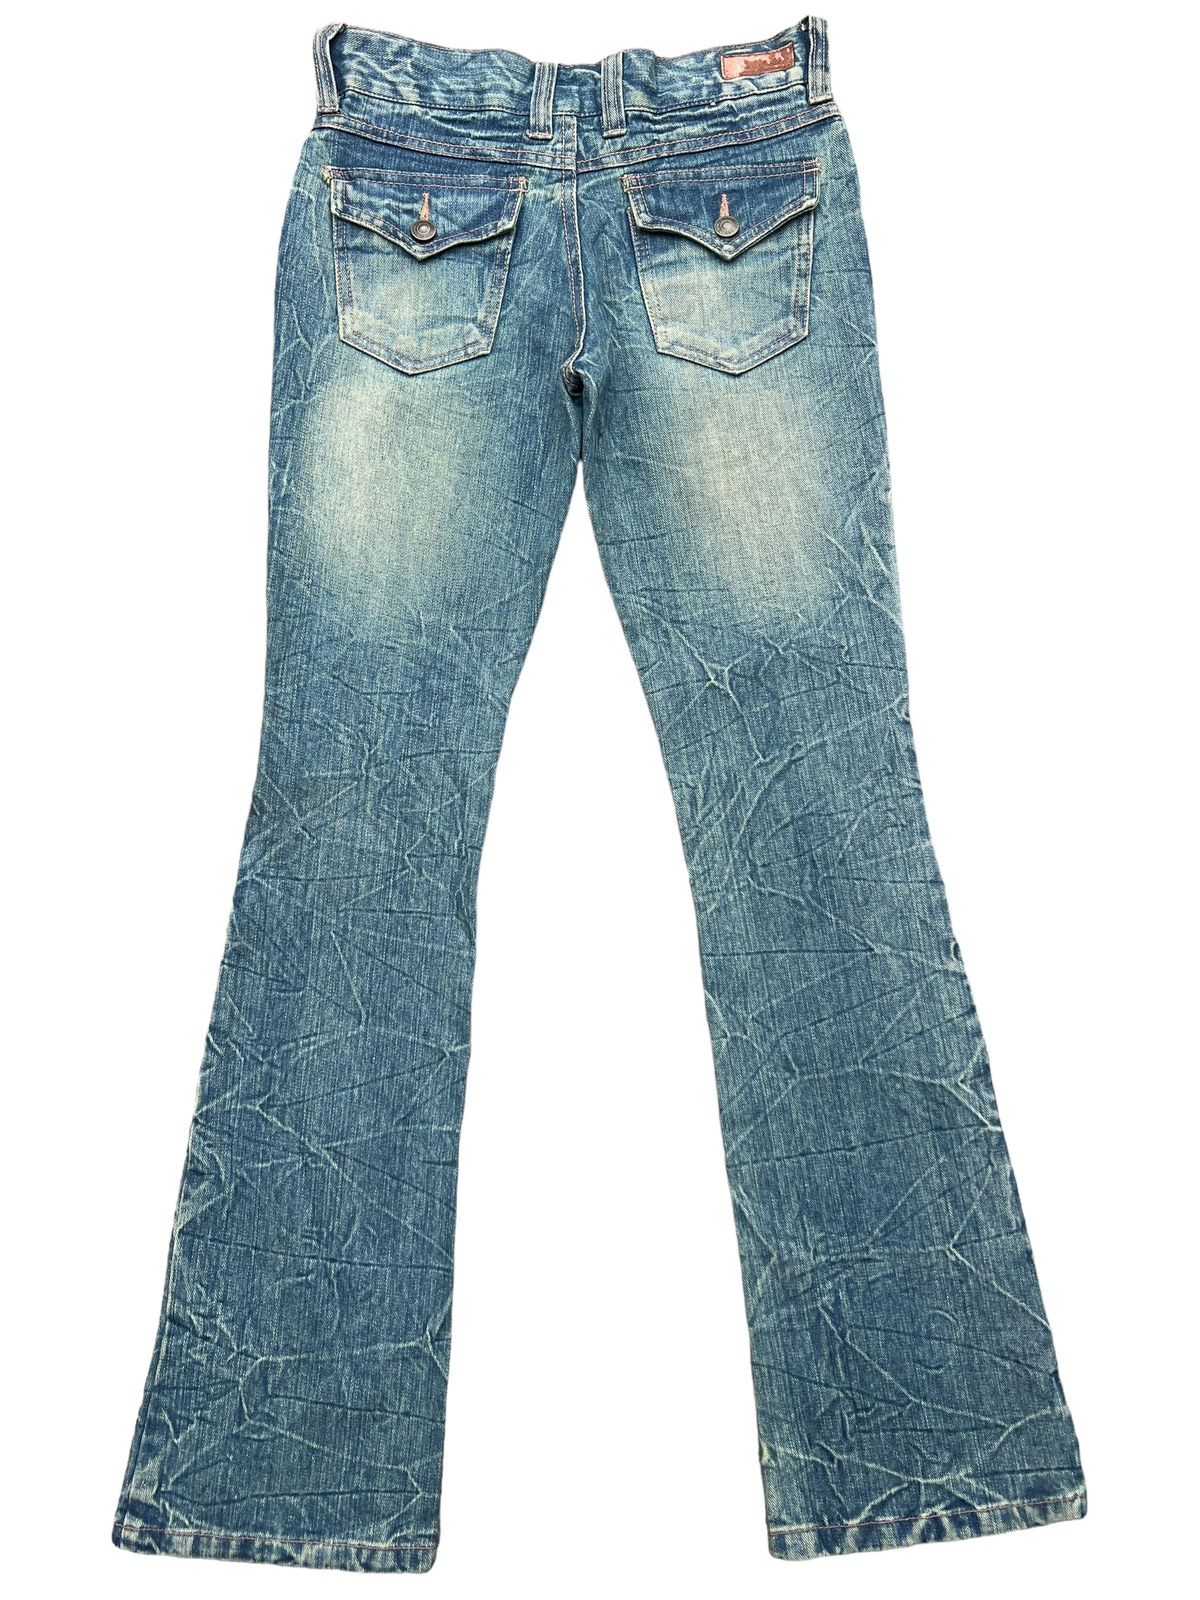 Hype - Japanese Brand Distressed Mudwash Flare Denim Jeans 28x30.5 - 3